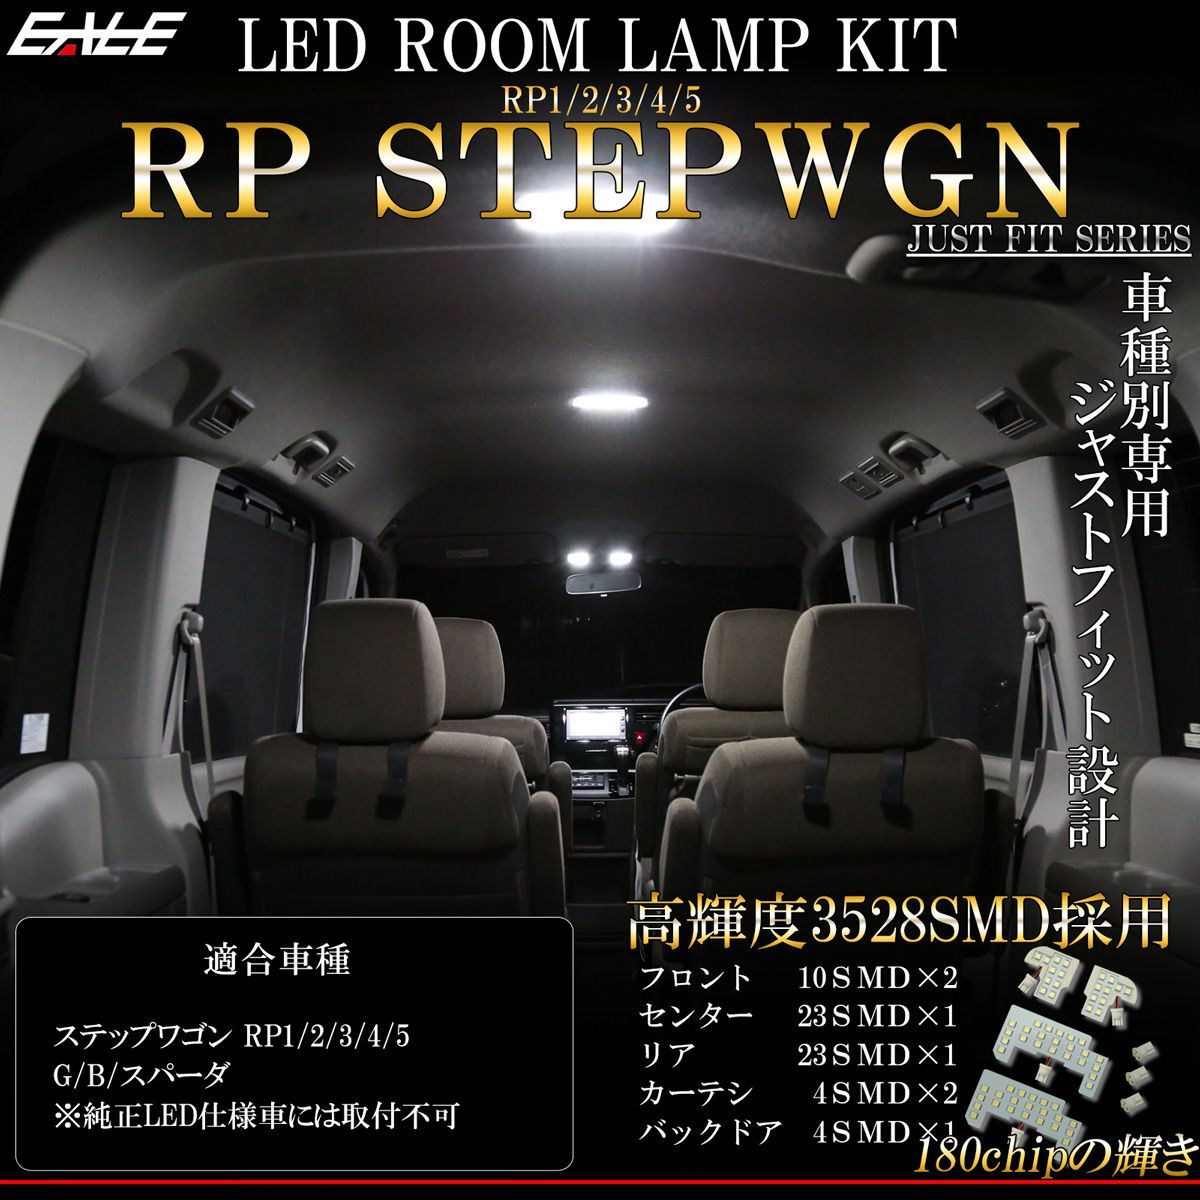 RP1 RP2 RP3 RP4 RP5 ステップワゴン スパーダ LED ルームランプ 室内灯 EALE-ms 土・日・祝日は定休日 メルカリ